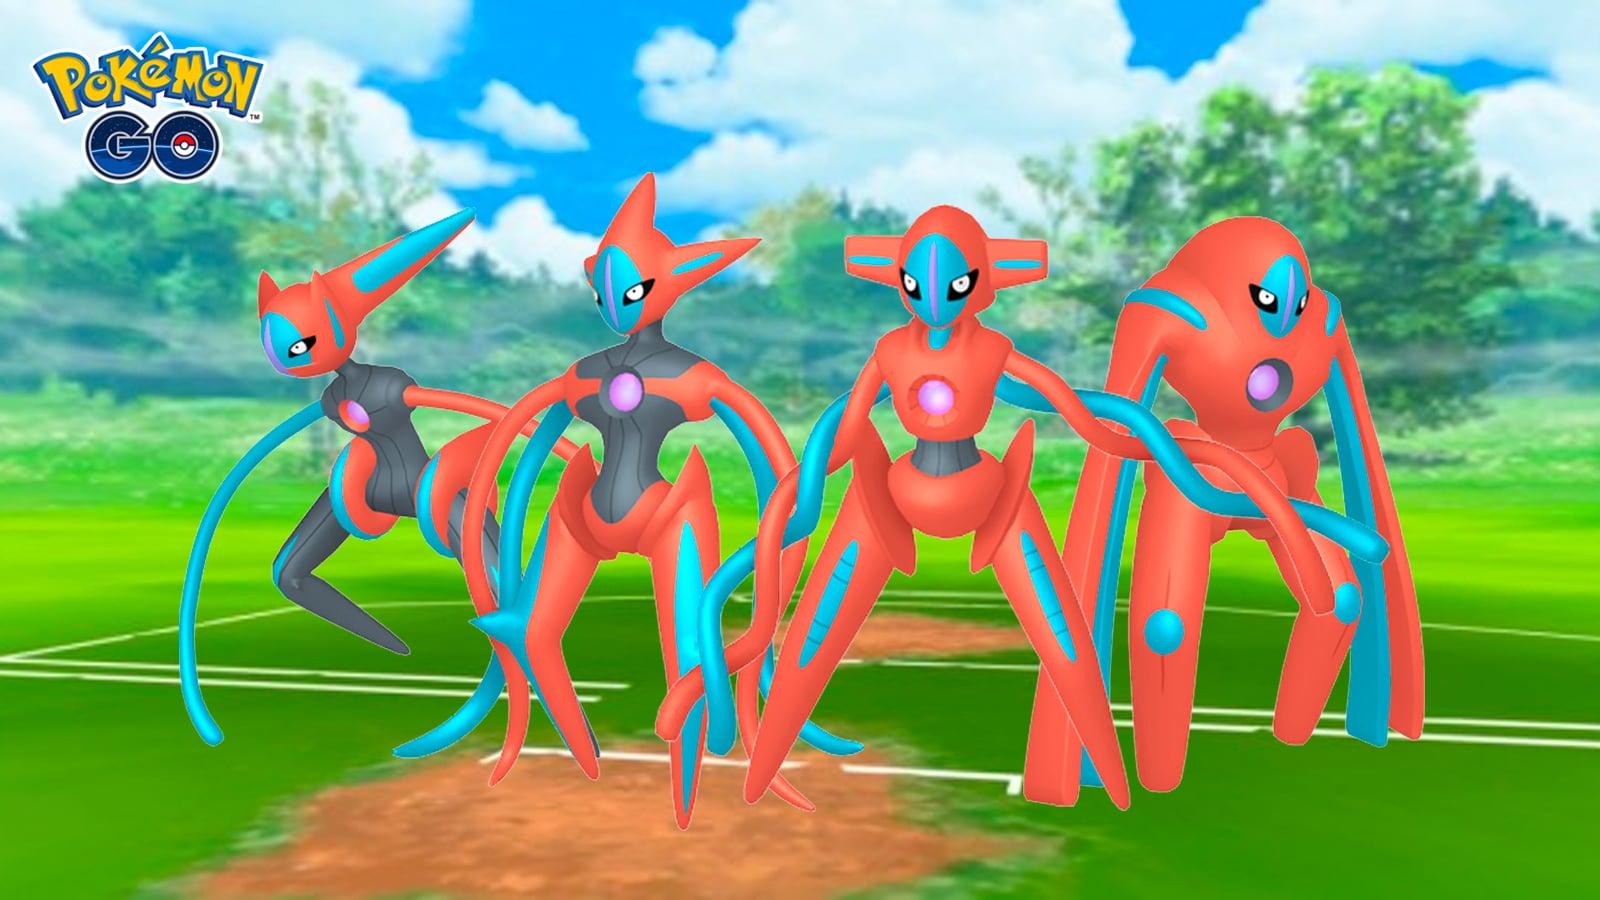 The best moveset for Deoxys in Pokemon GO